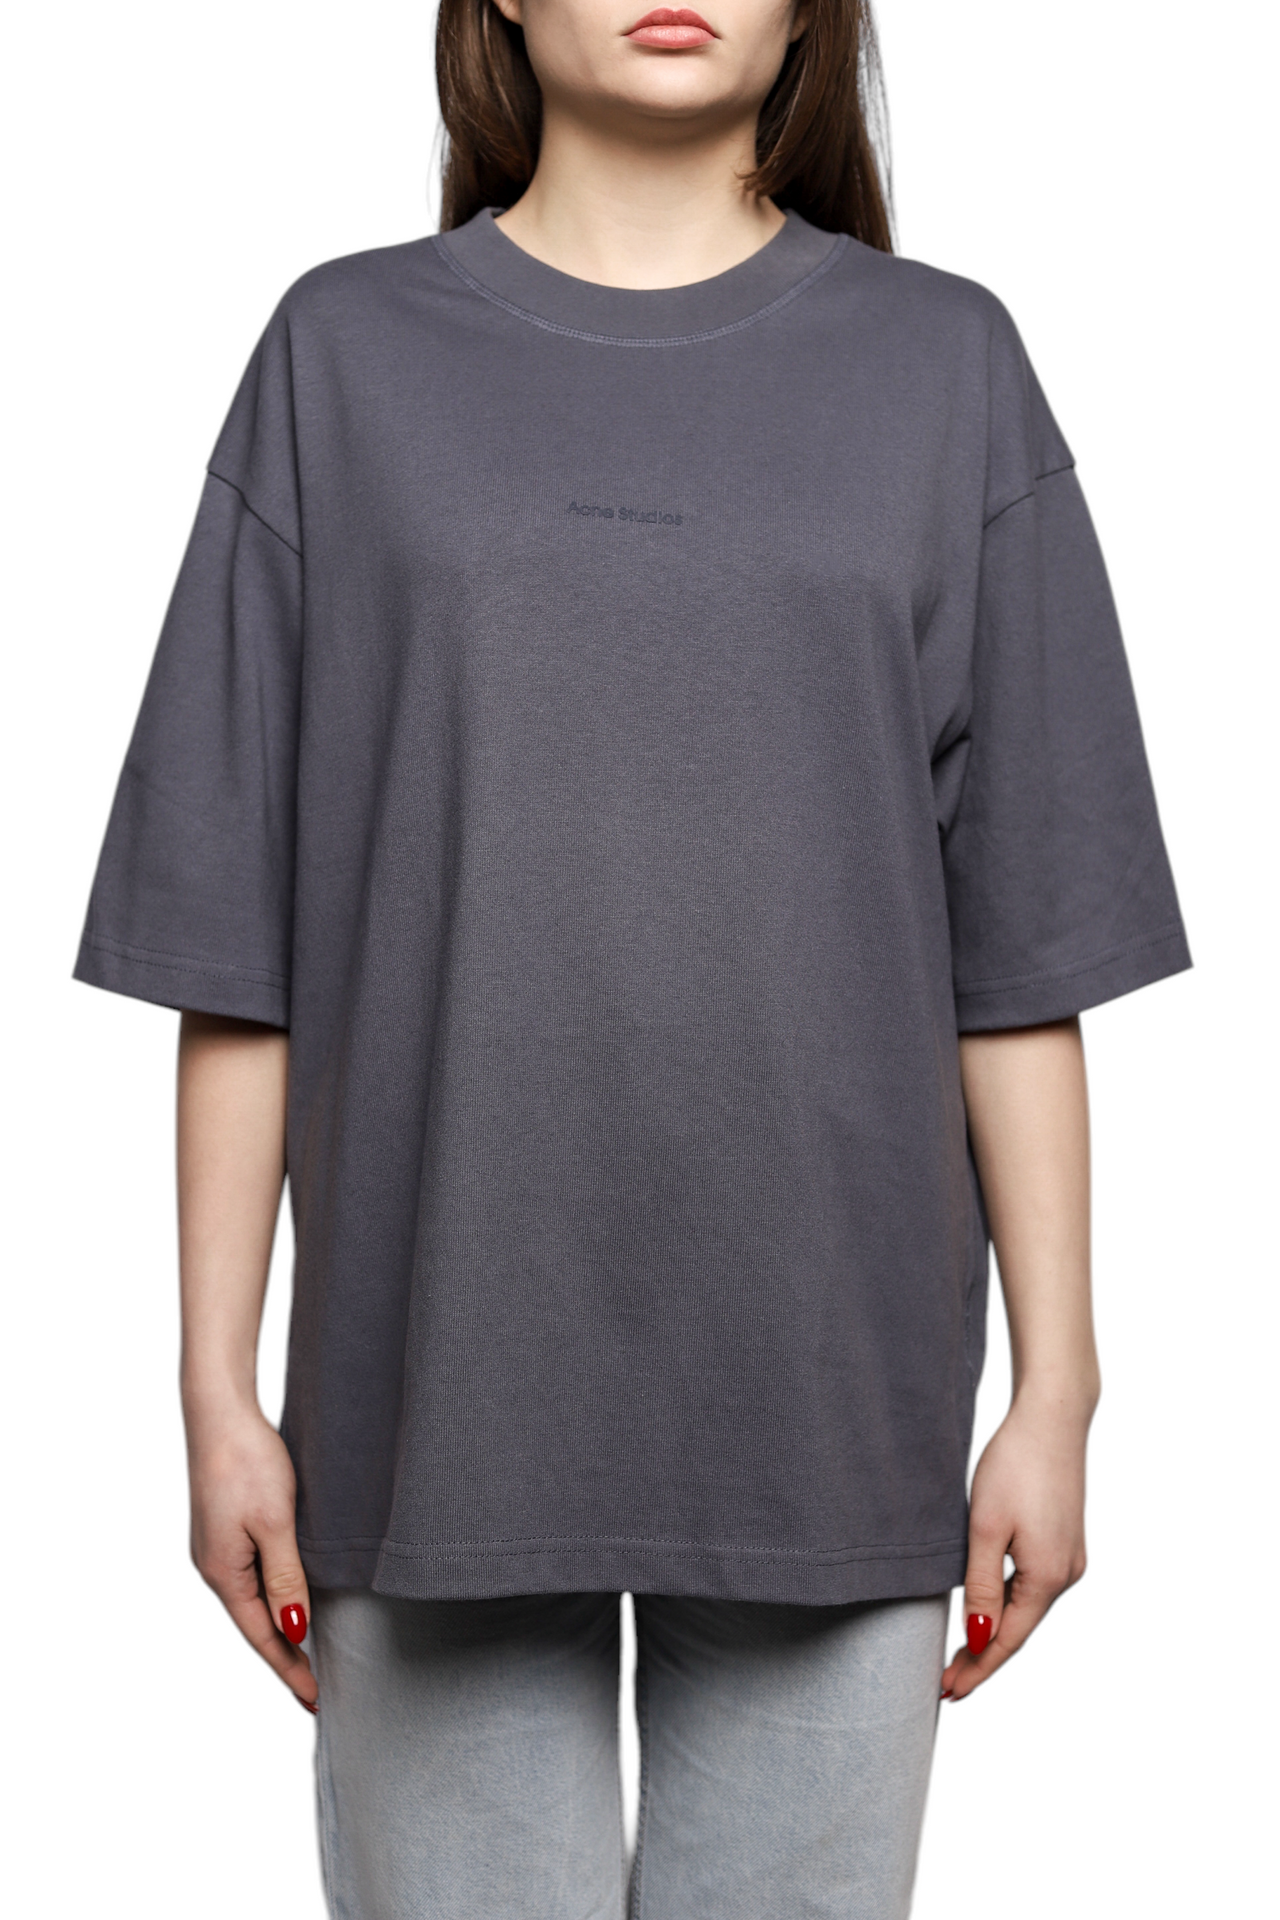 Acne Studios Logo cotton jersey T-shirt Slate Grey